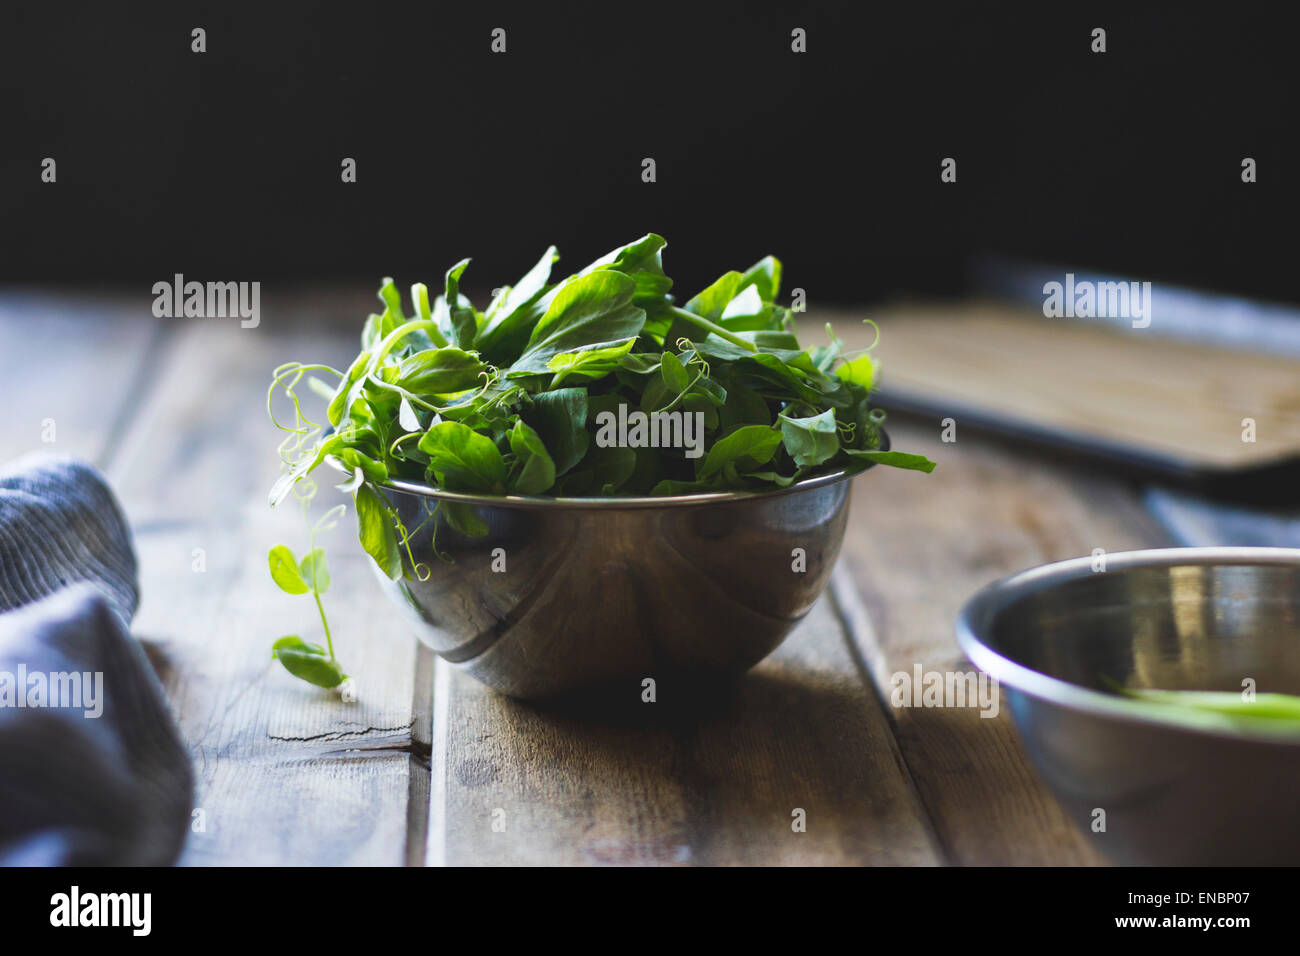 Pea shoots in a metallic bowl Stock Photo